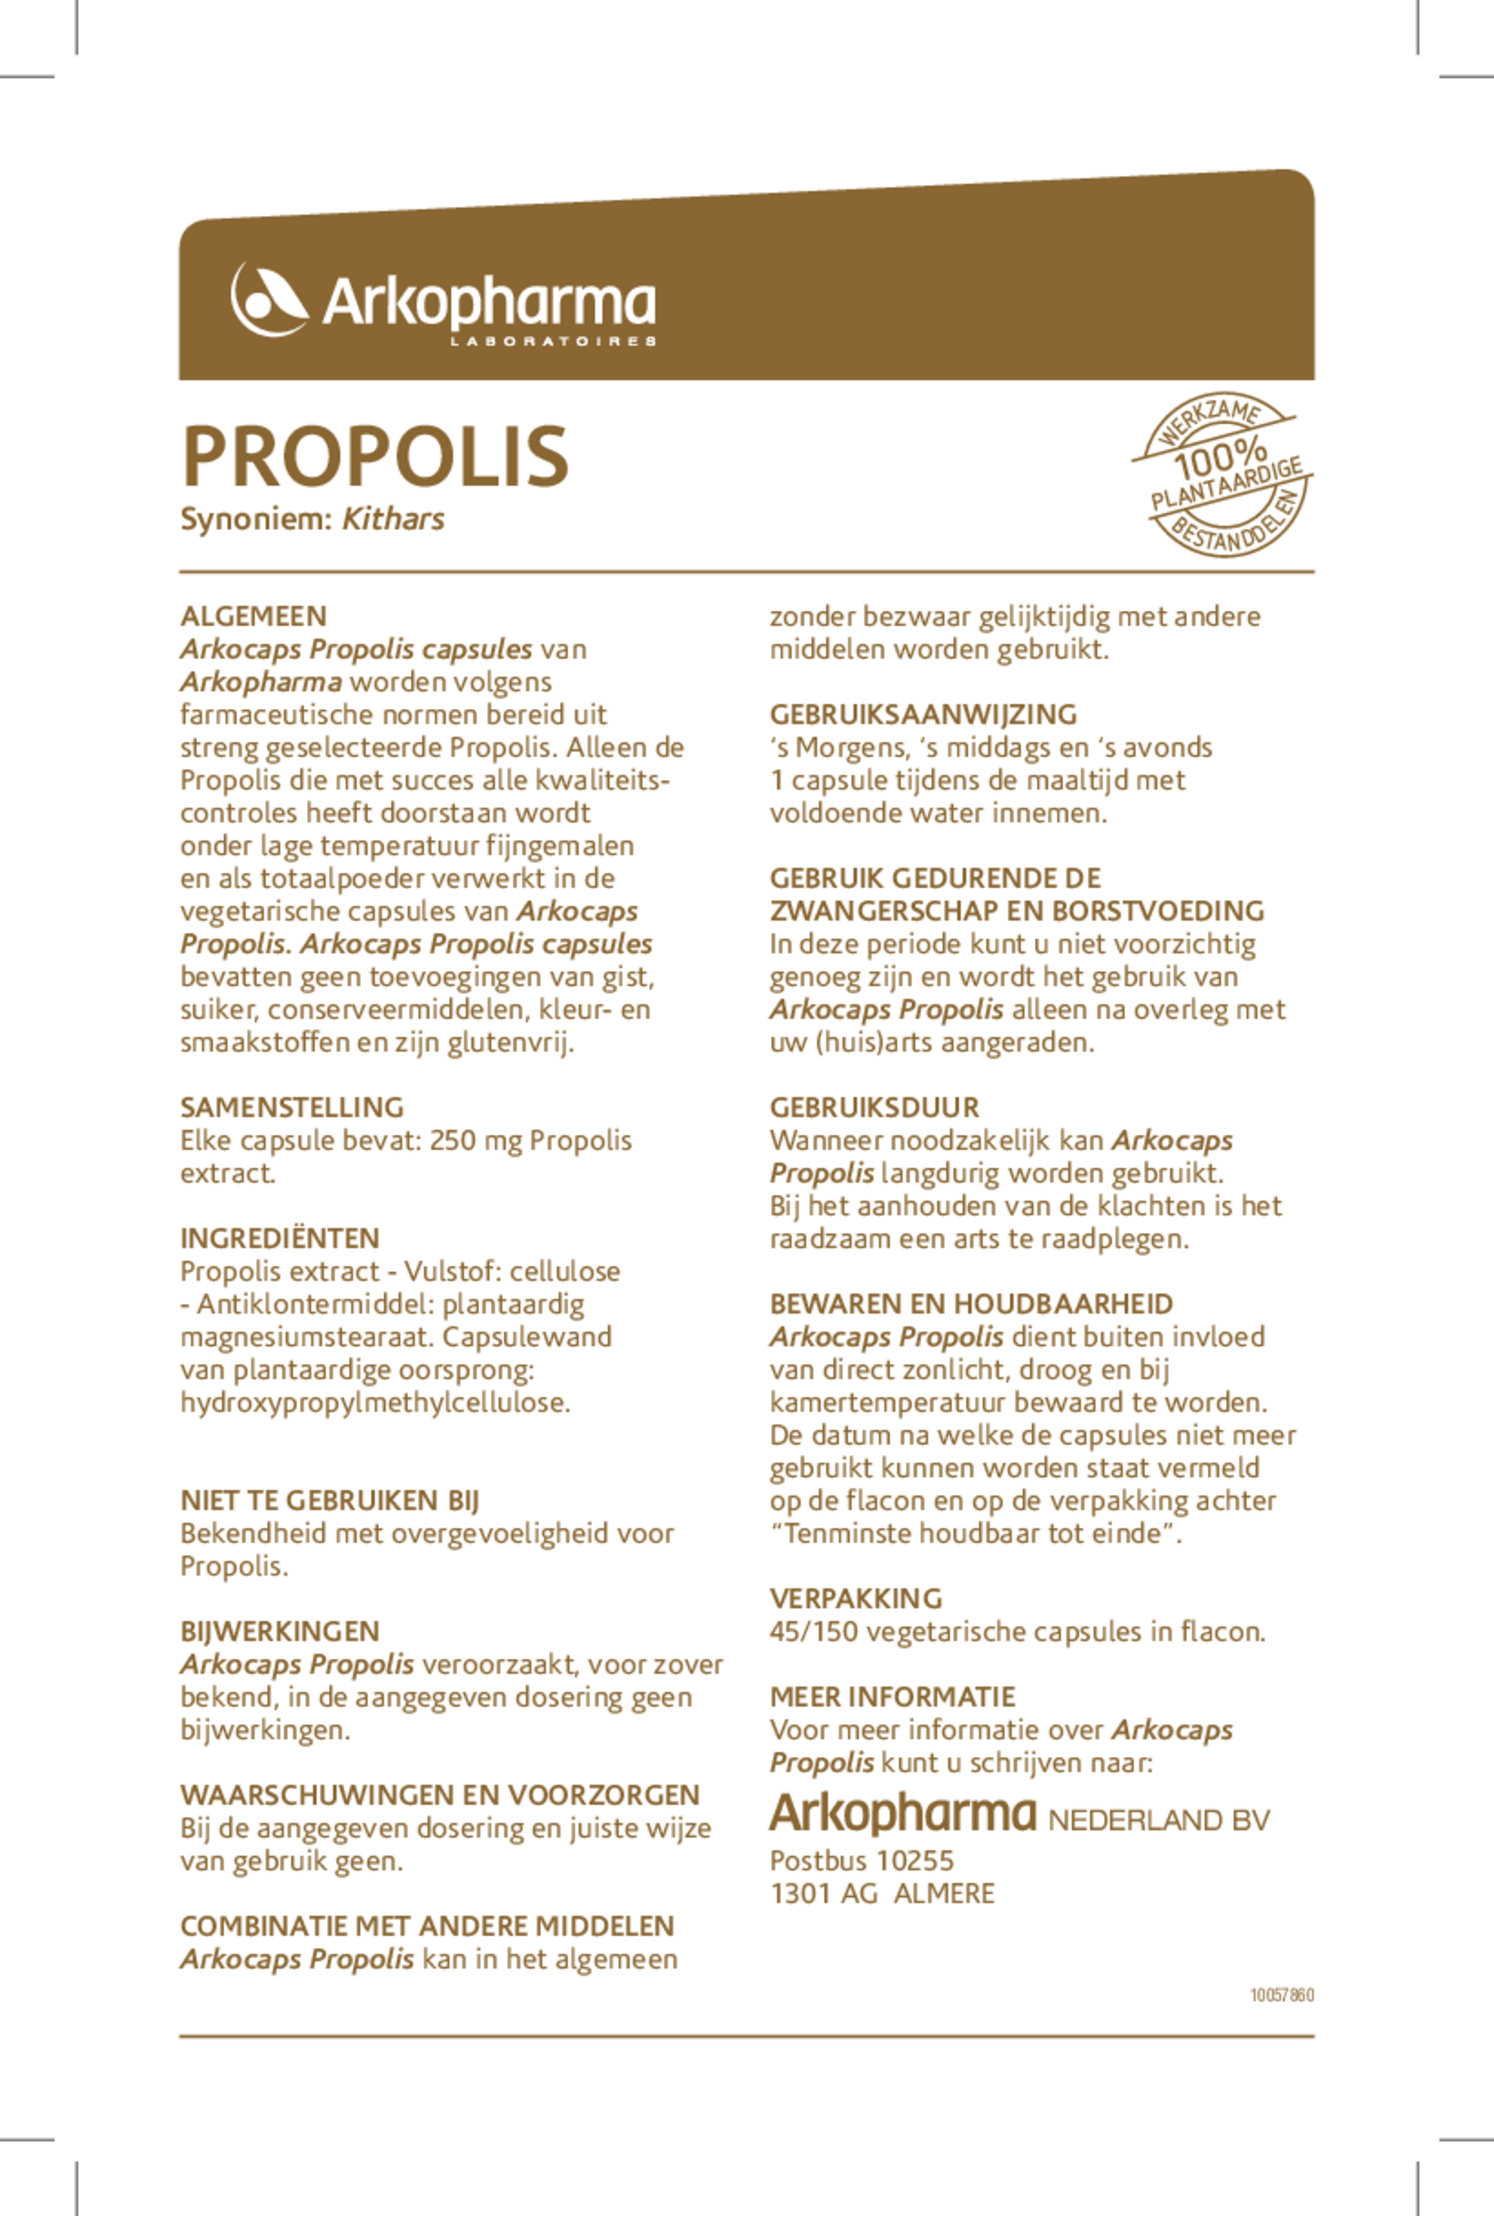 Propolis Capsules afbeelding van document #1, gebruiksaanwijzing